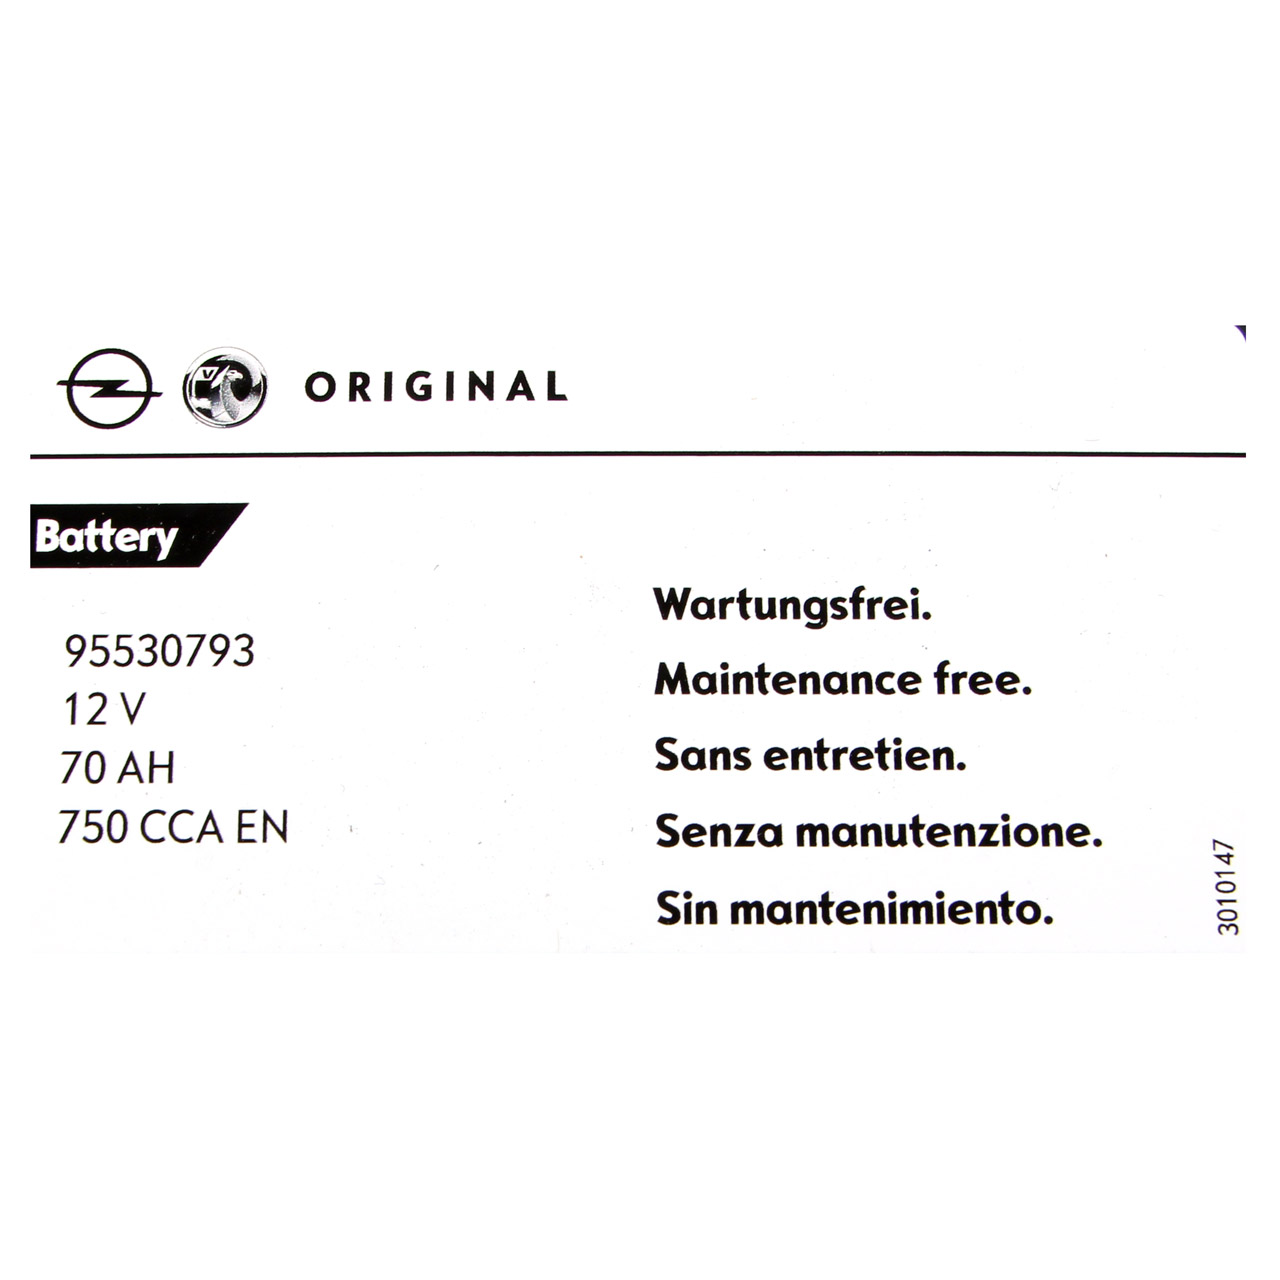 ORIGINAL GM Opel Autobatterie Starterbatterie 12V 70Ah 760 CCA EN 13575154